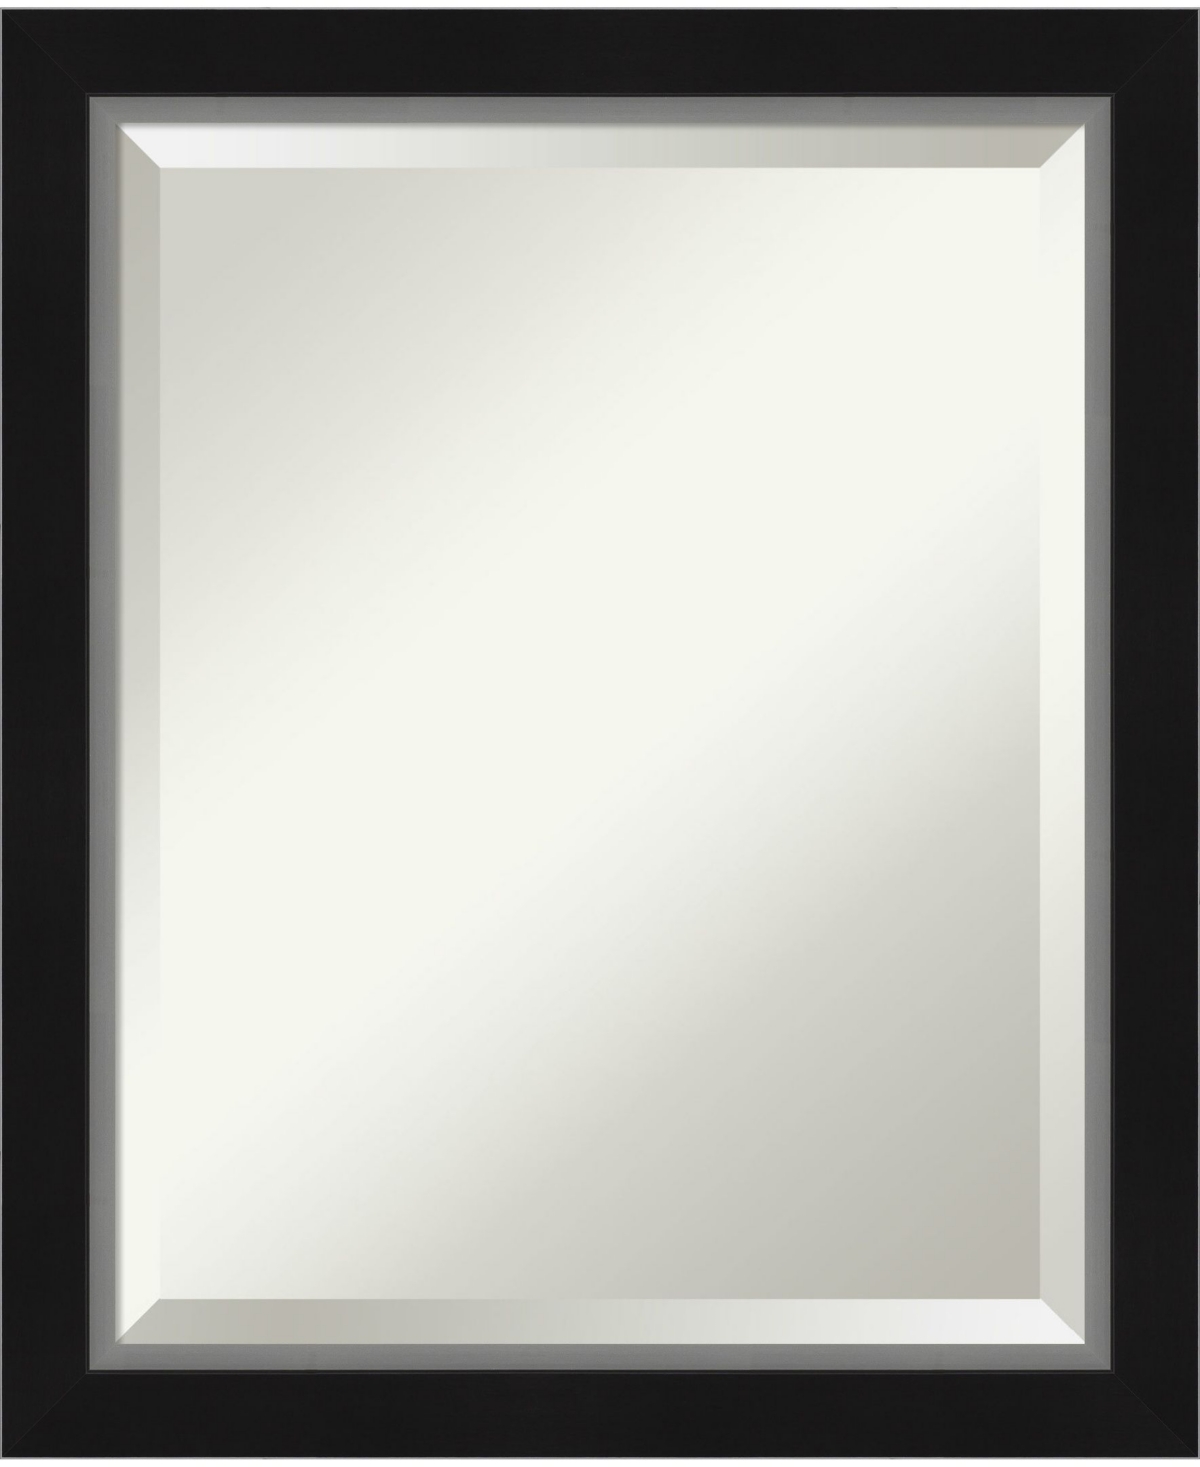 Eva Silver-tone Framed Bathroom Vanity Wall Mirror, 19.12" x 23.12" - Black